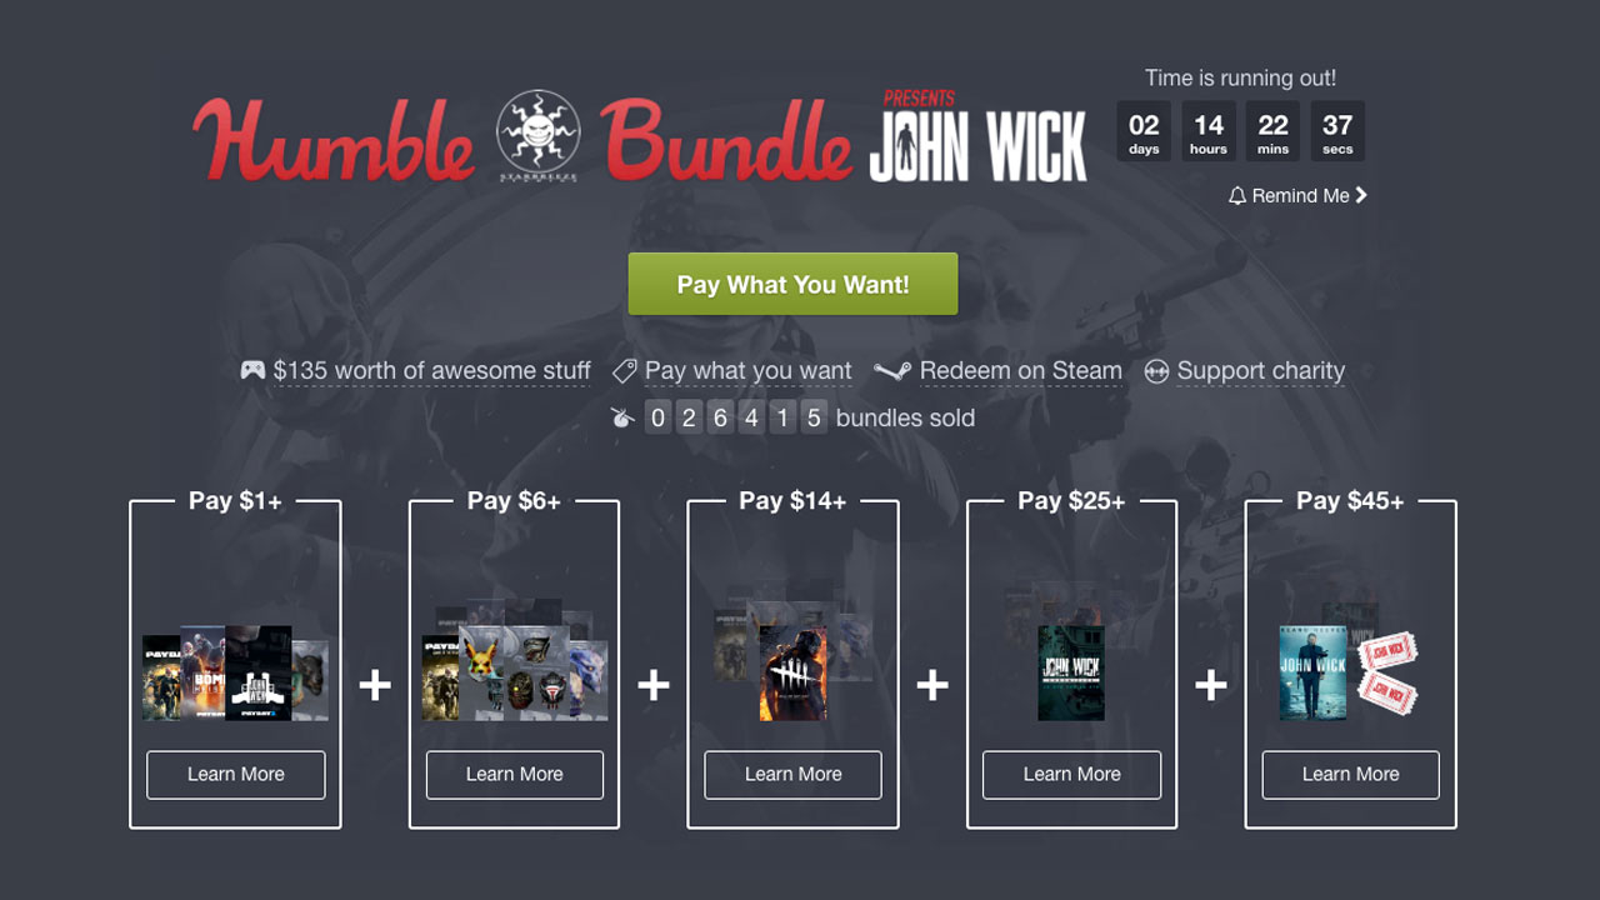 Humble Bundle Has its First Epic Games Bundle